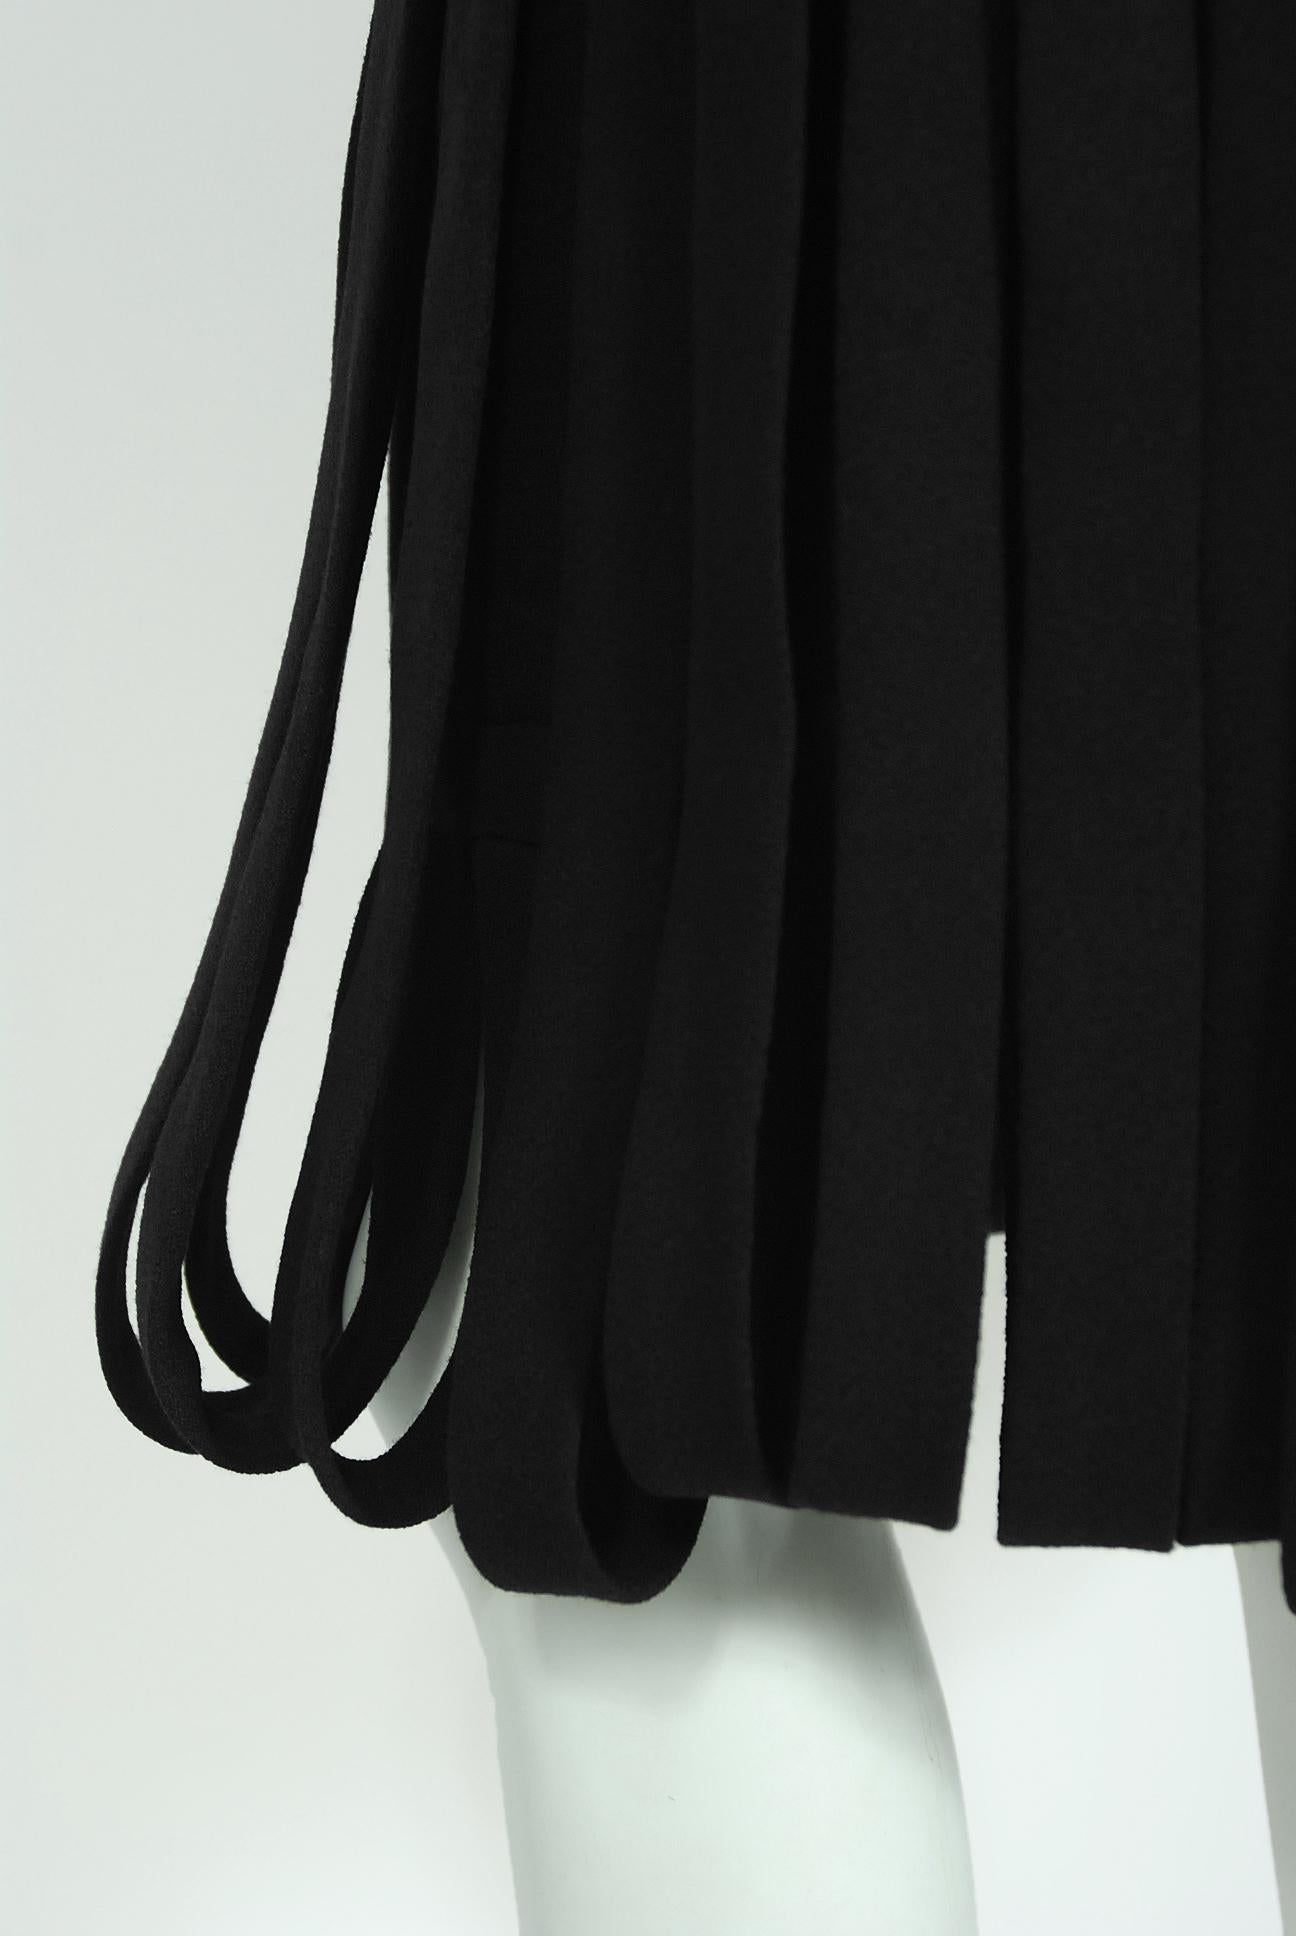 Vintage 1967 Pierre Cardin Documented Black Wool Space-Age Mod Carwash Dress 5